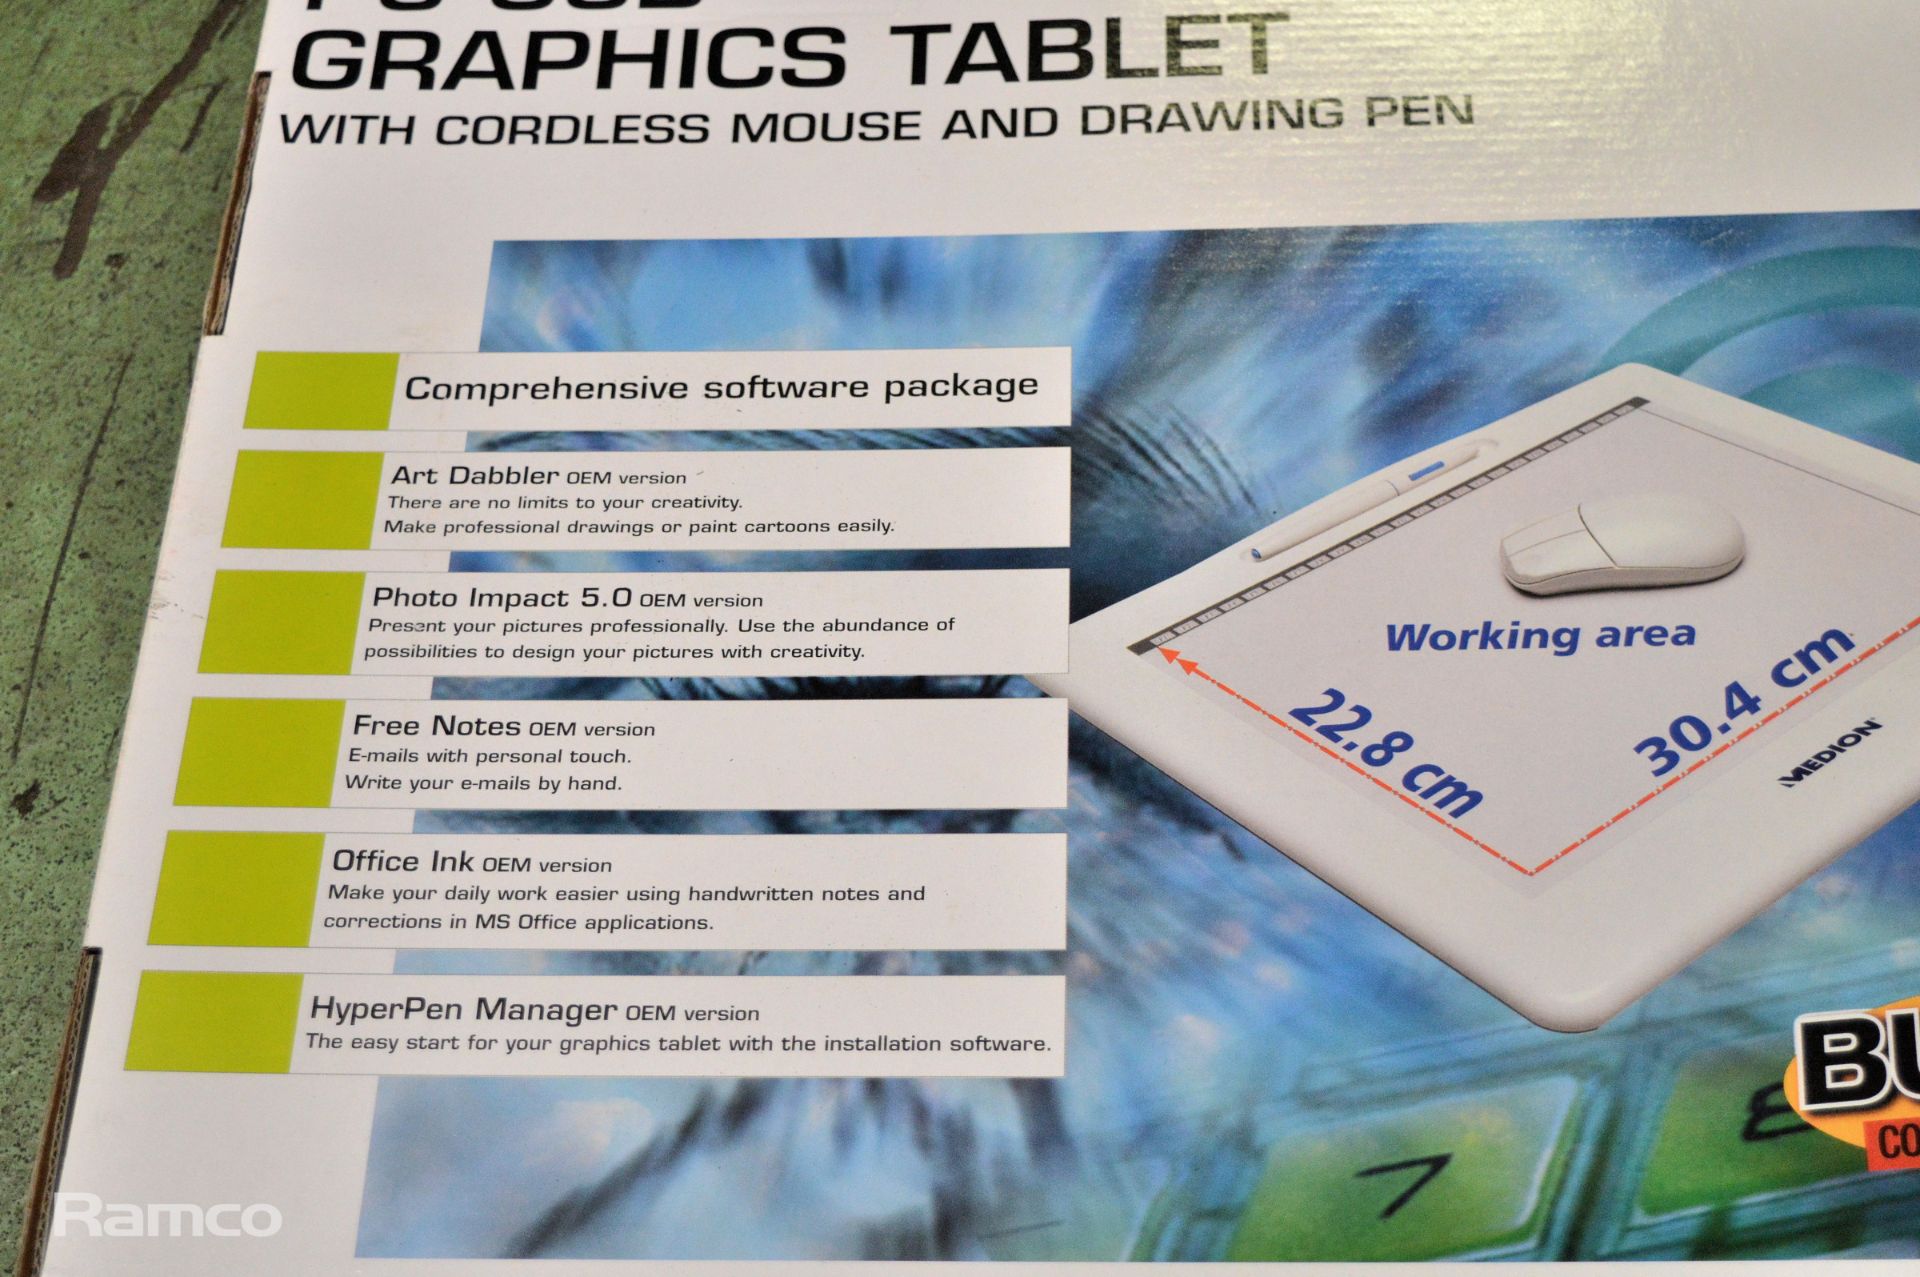 Medion computer USB graphics tablet - Image 2 of 3